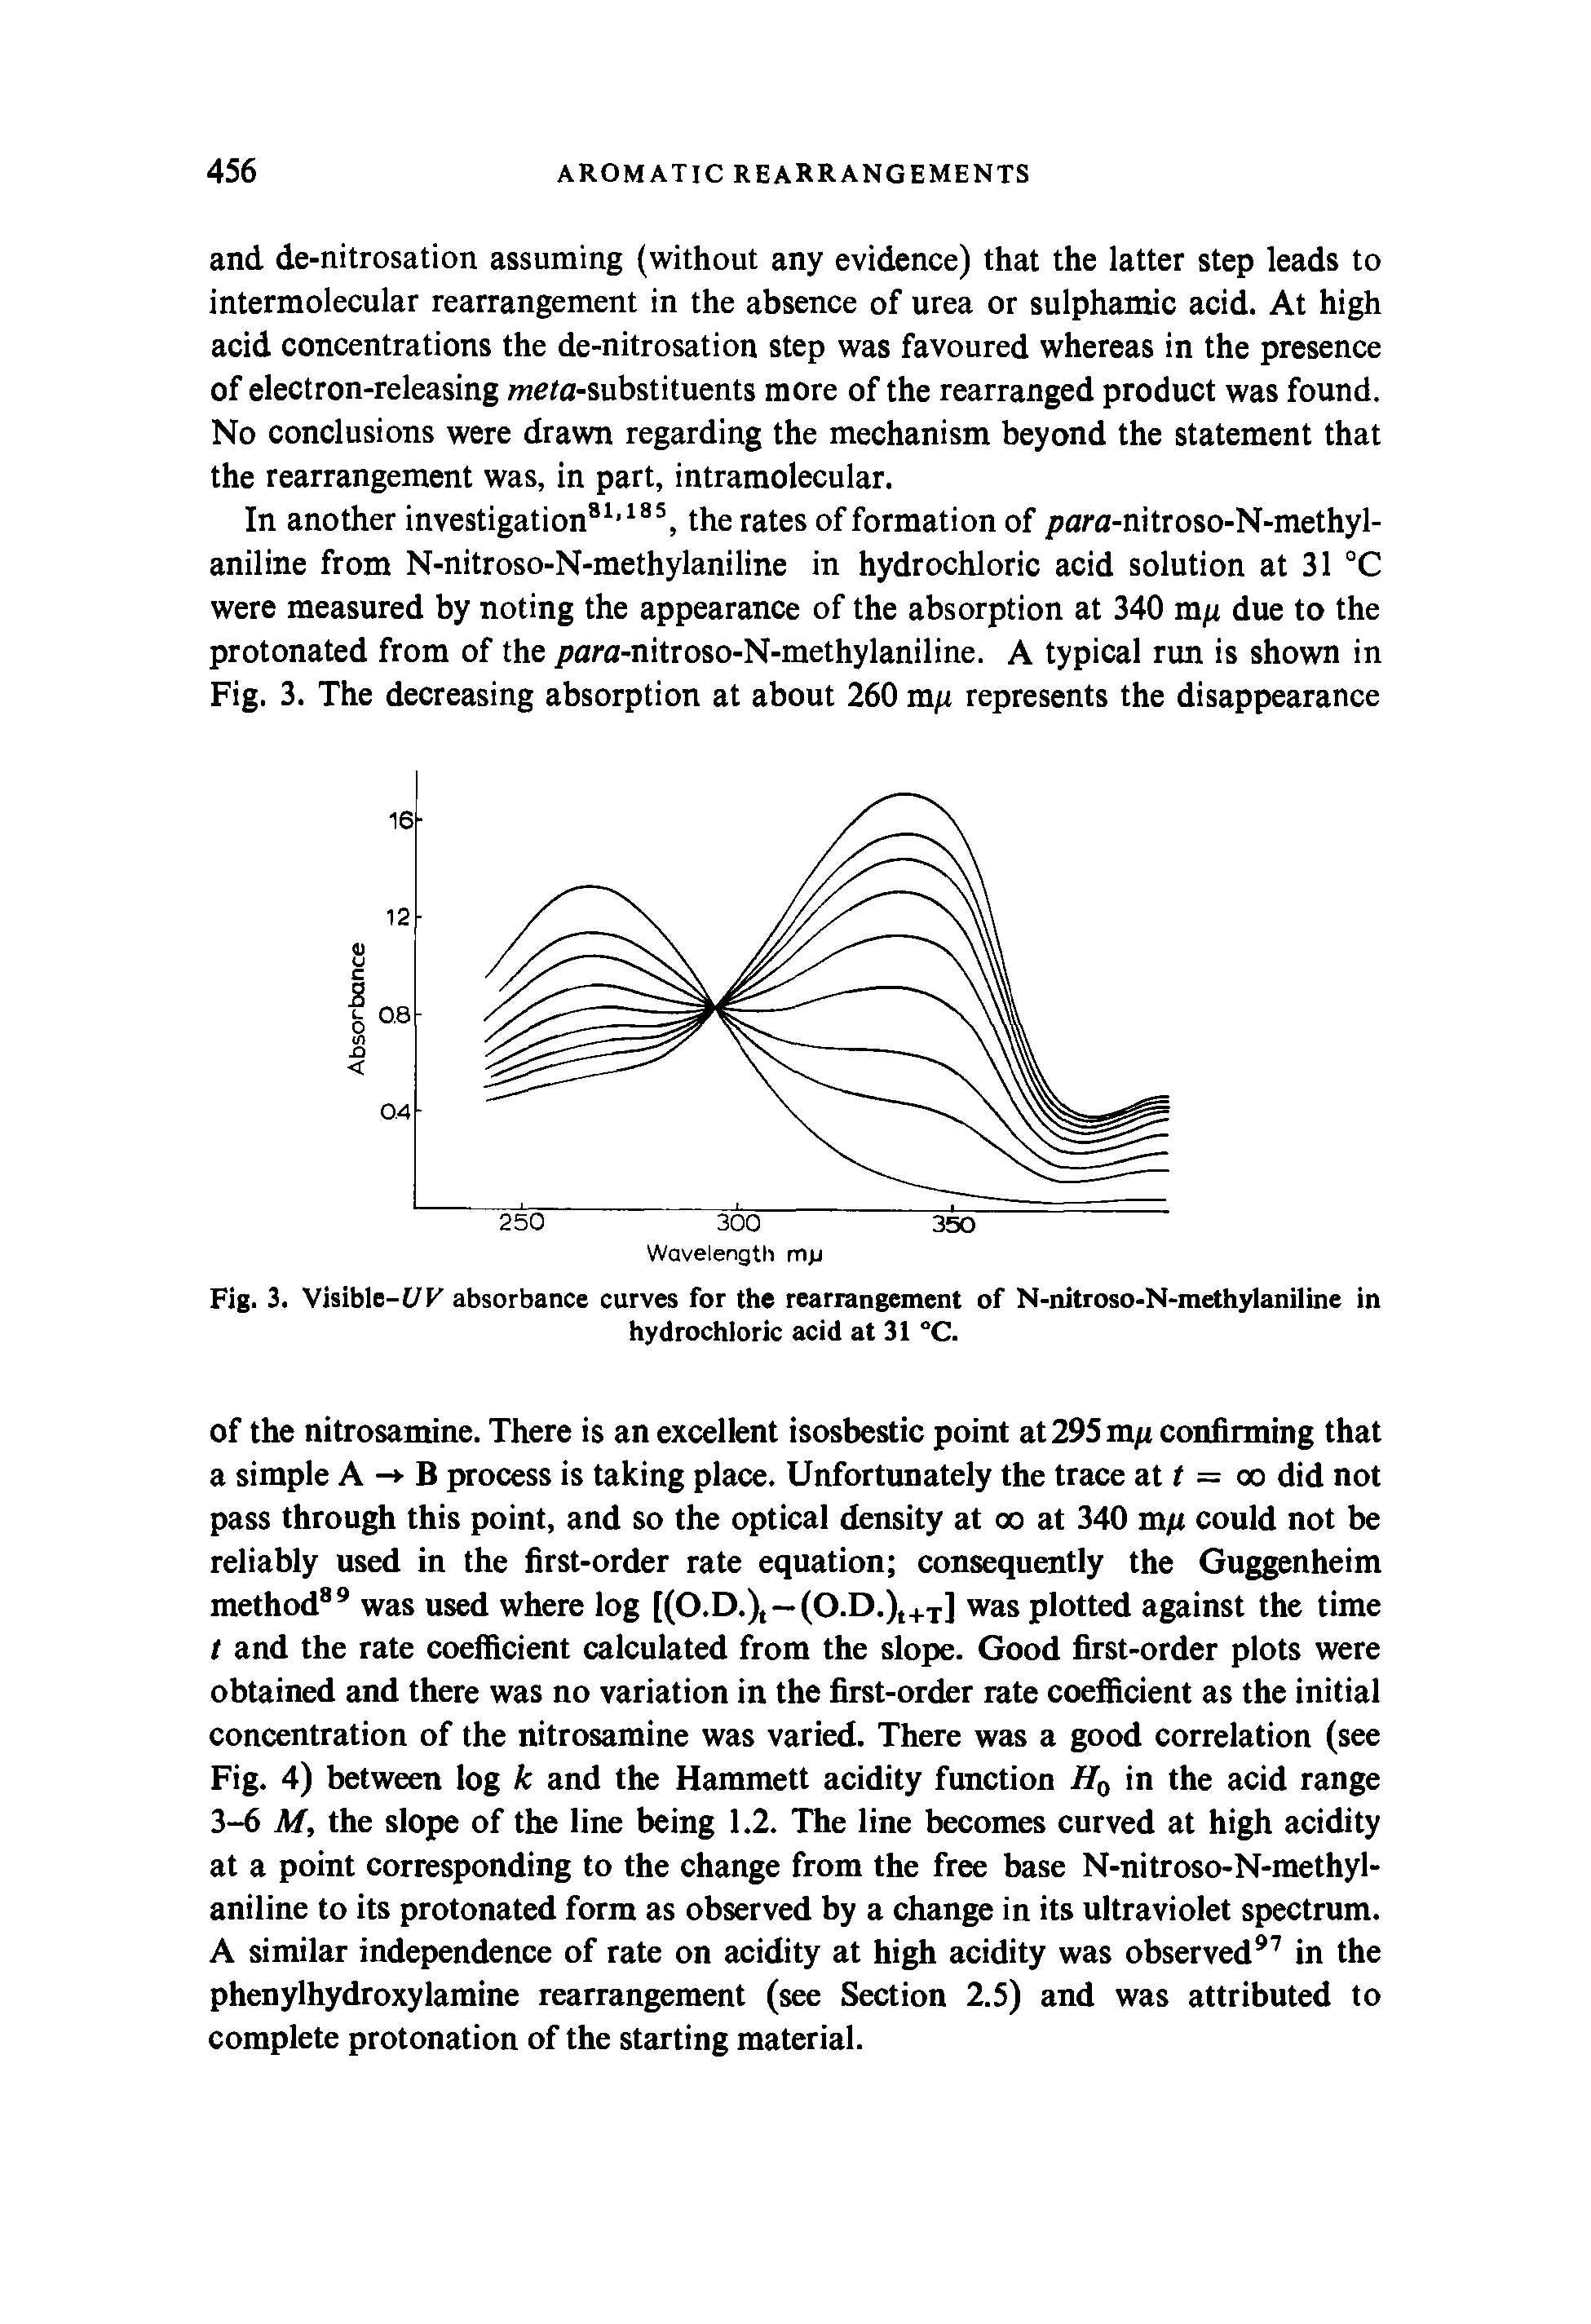 Fig. 3. Visible—C/K absorbance curves for the rearrangement of N-nitroso-N-methylaniline in...